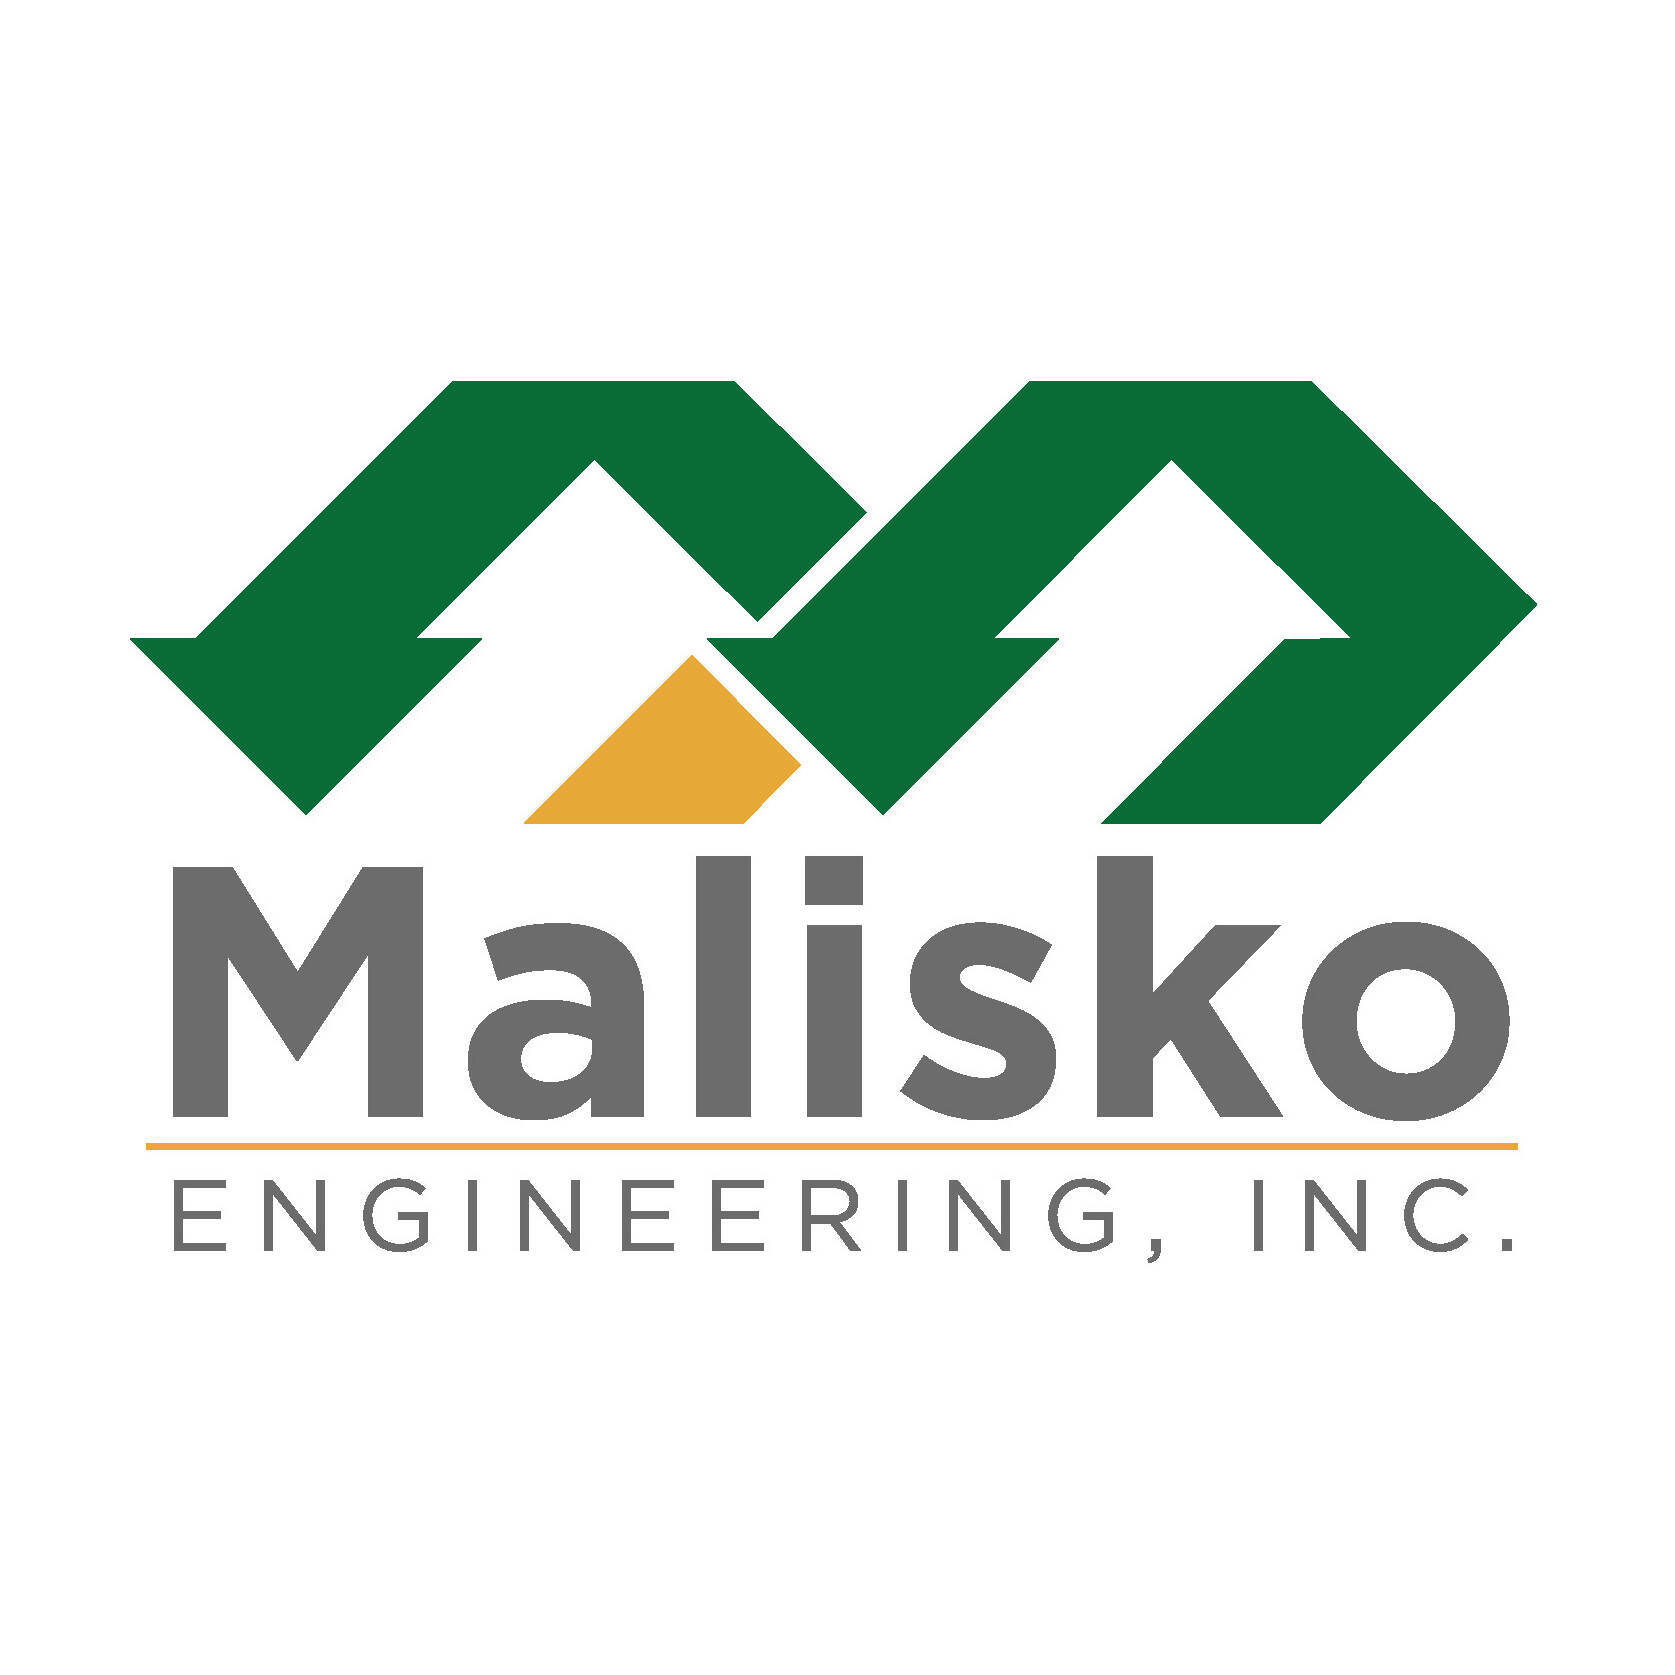 MALISKO ENGINEERING/EAU CLAIRE - A&E TECHNOLOGY SCHOLARSHIP